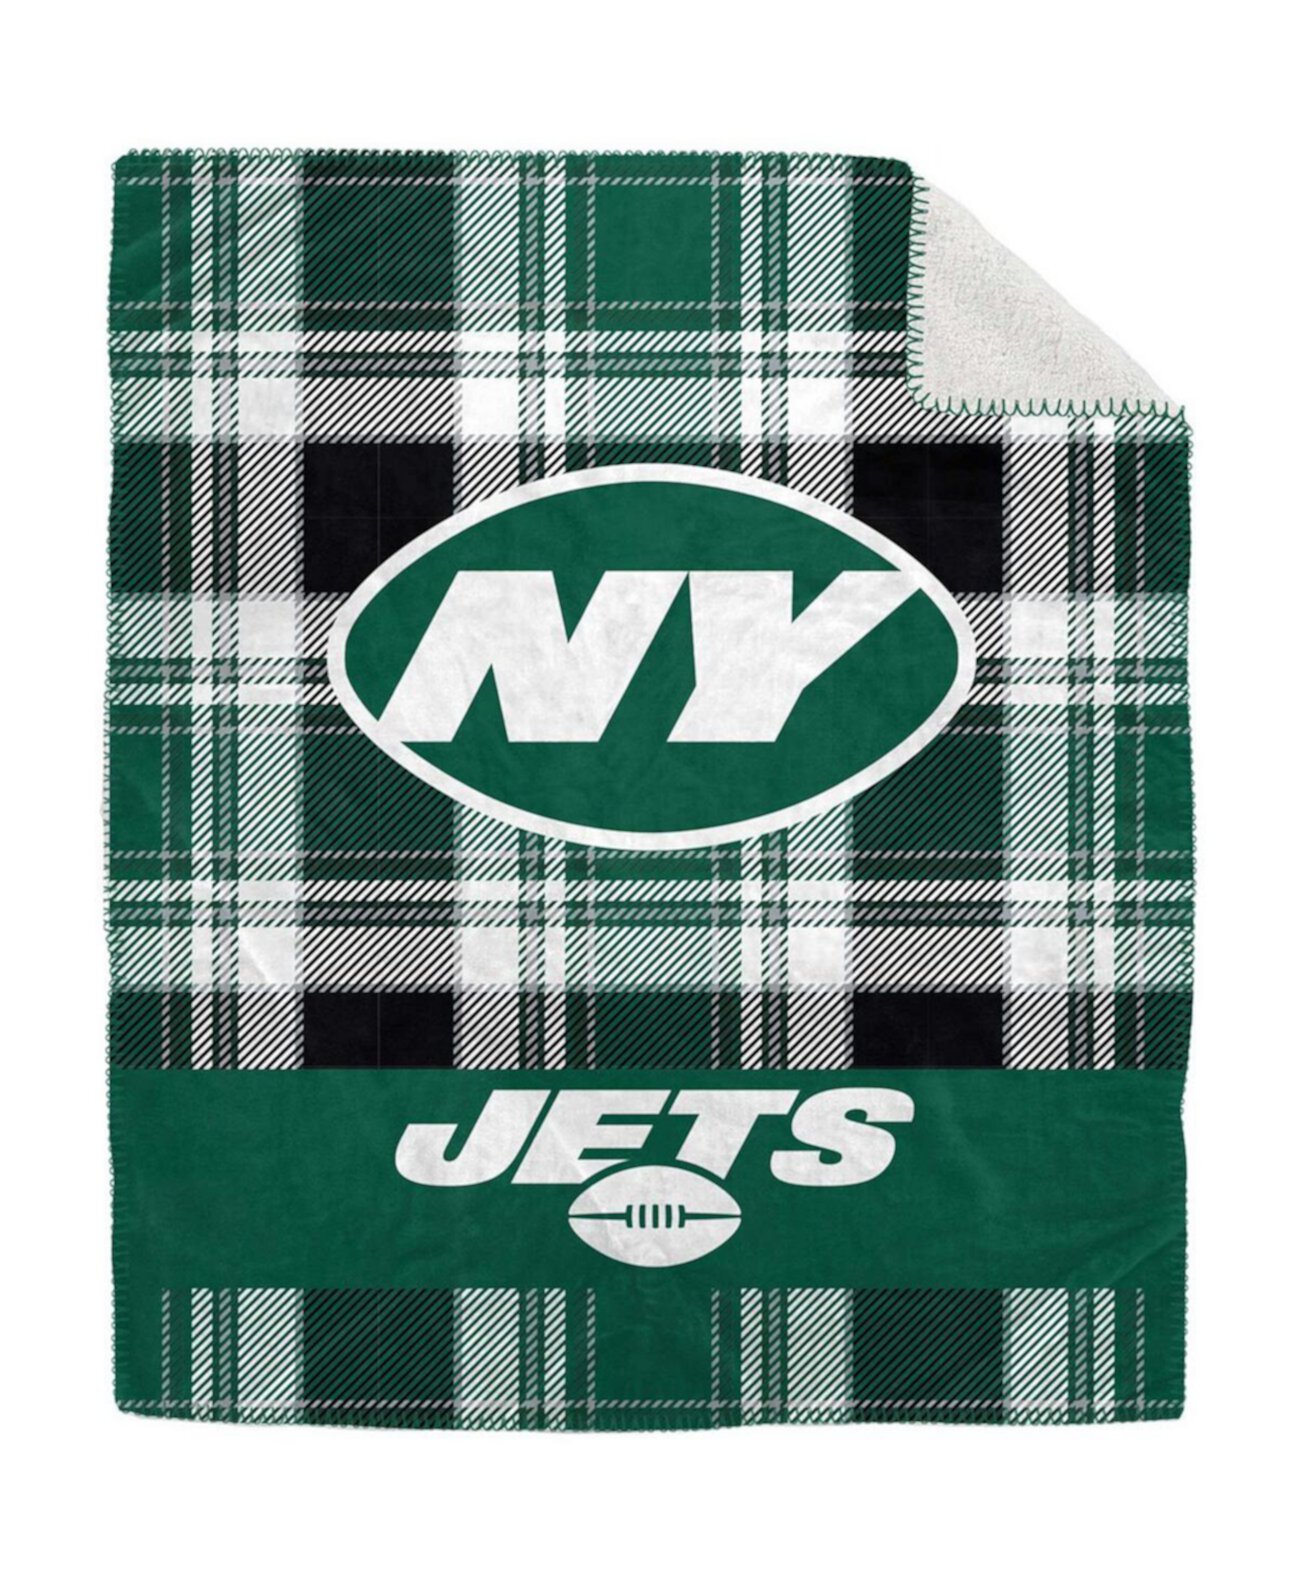 Плюшевое фланелевое одеяло New York Jets размером 50 x 60 дюймов в клетку Pegasus Home Fashions